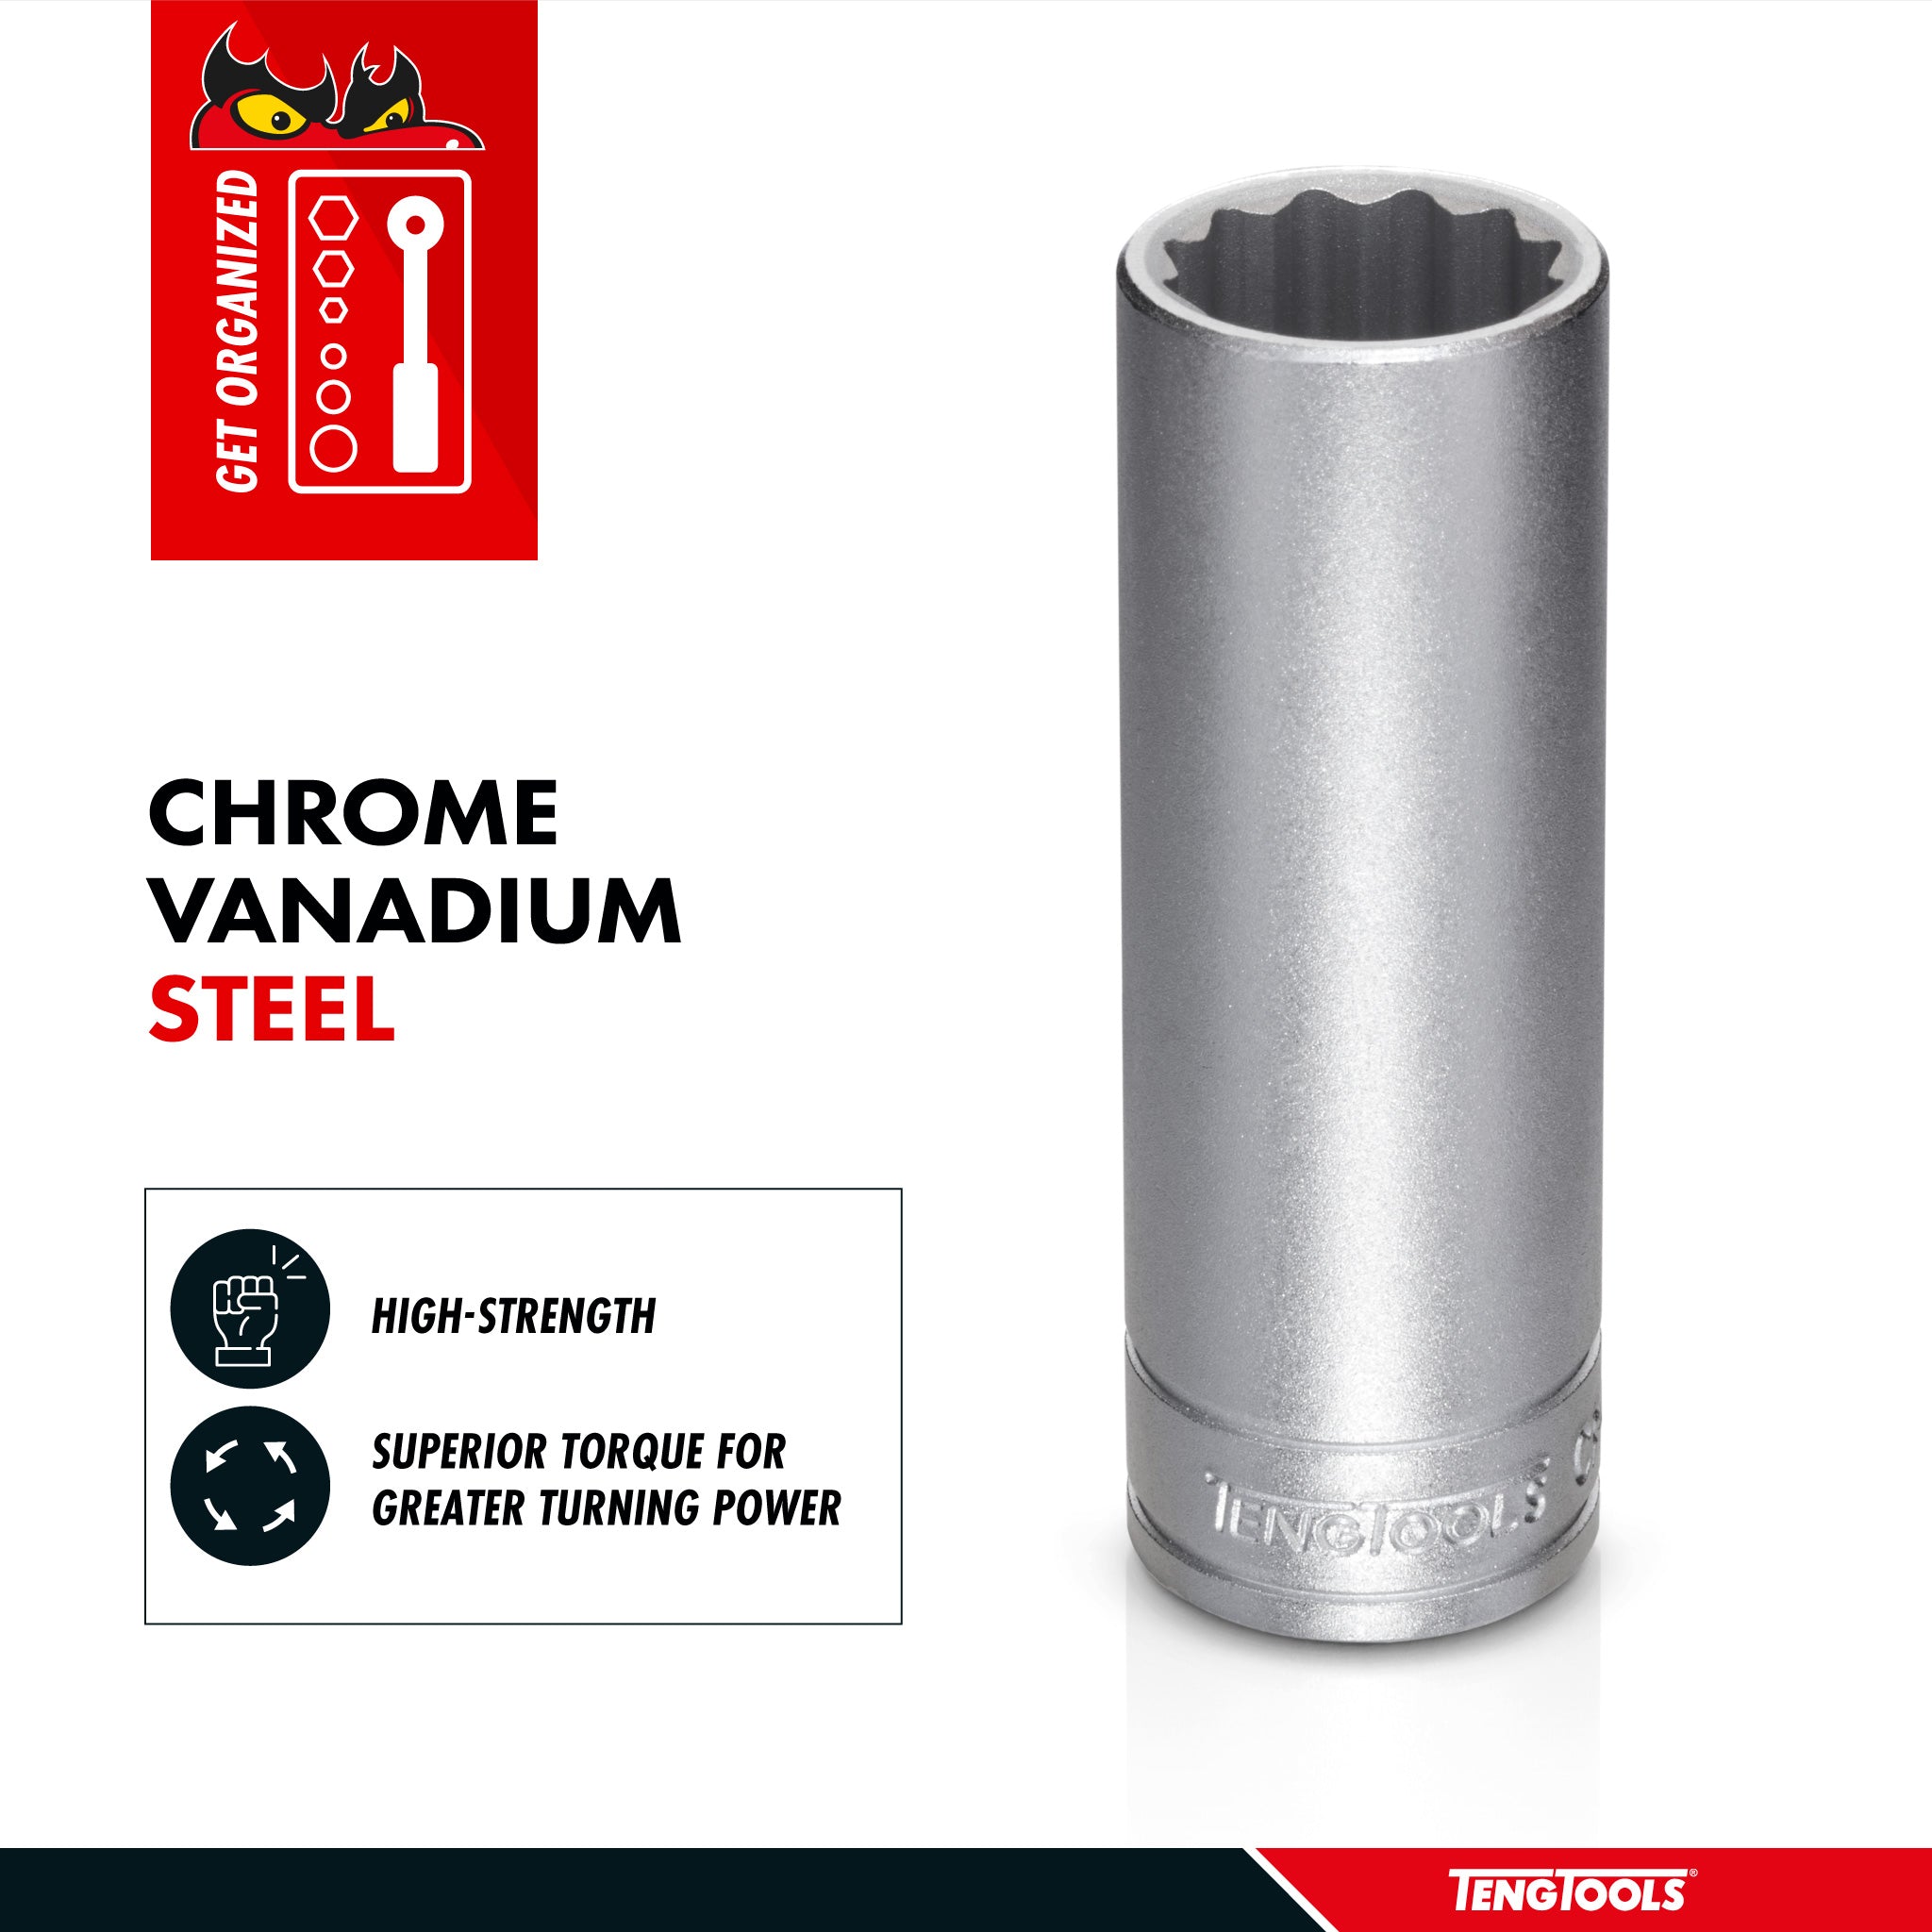 Teng Tools 1/2 Inch Drive 12 Point Metric Deep Chrome Vanadium Sockets - 27mm